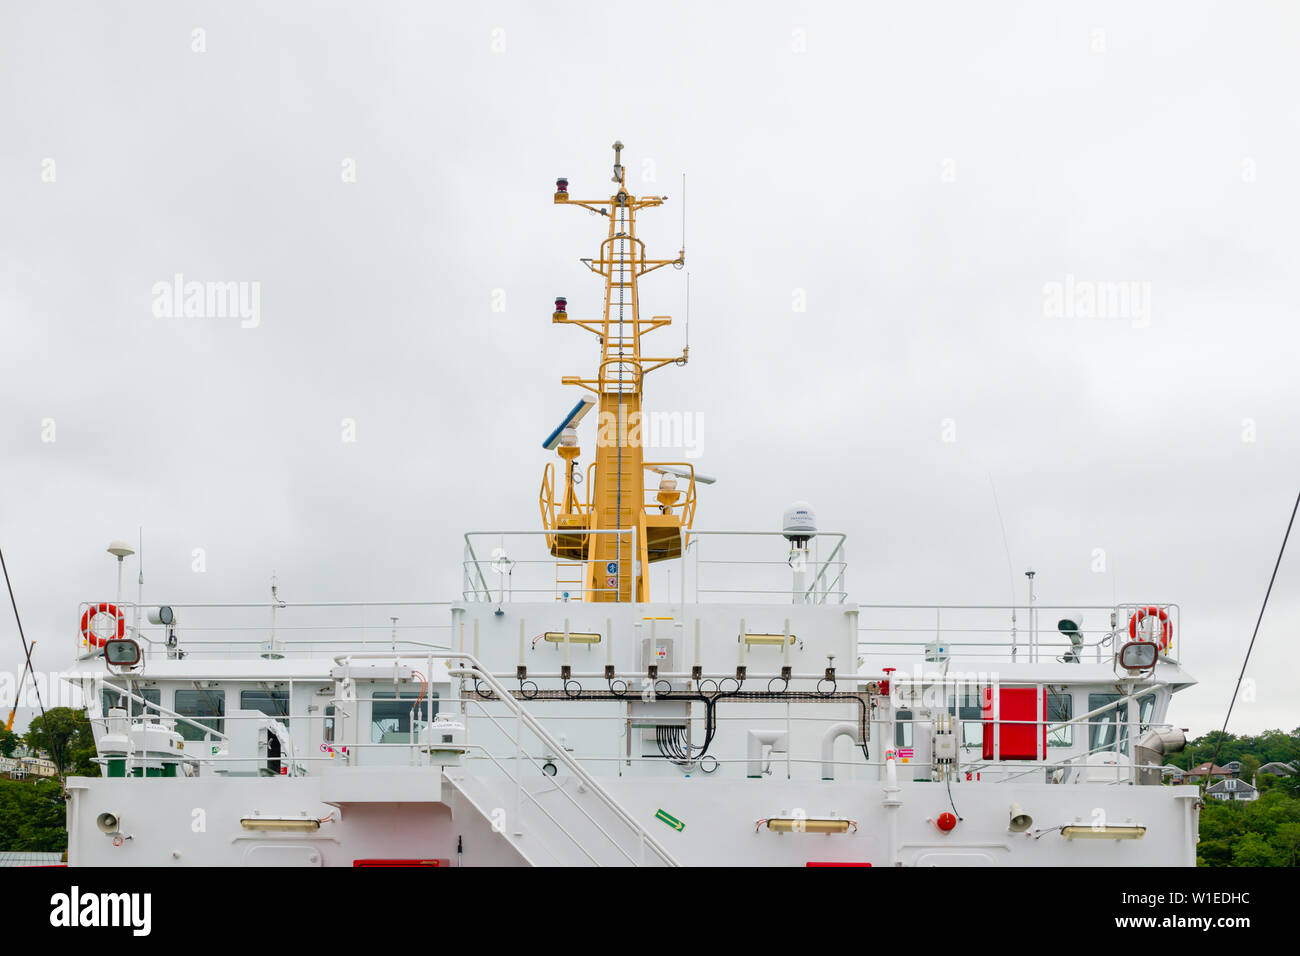 The mast and upper decks of a Calmac car ferry in Scotland Stock Photo